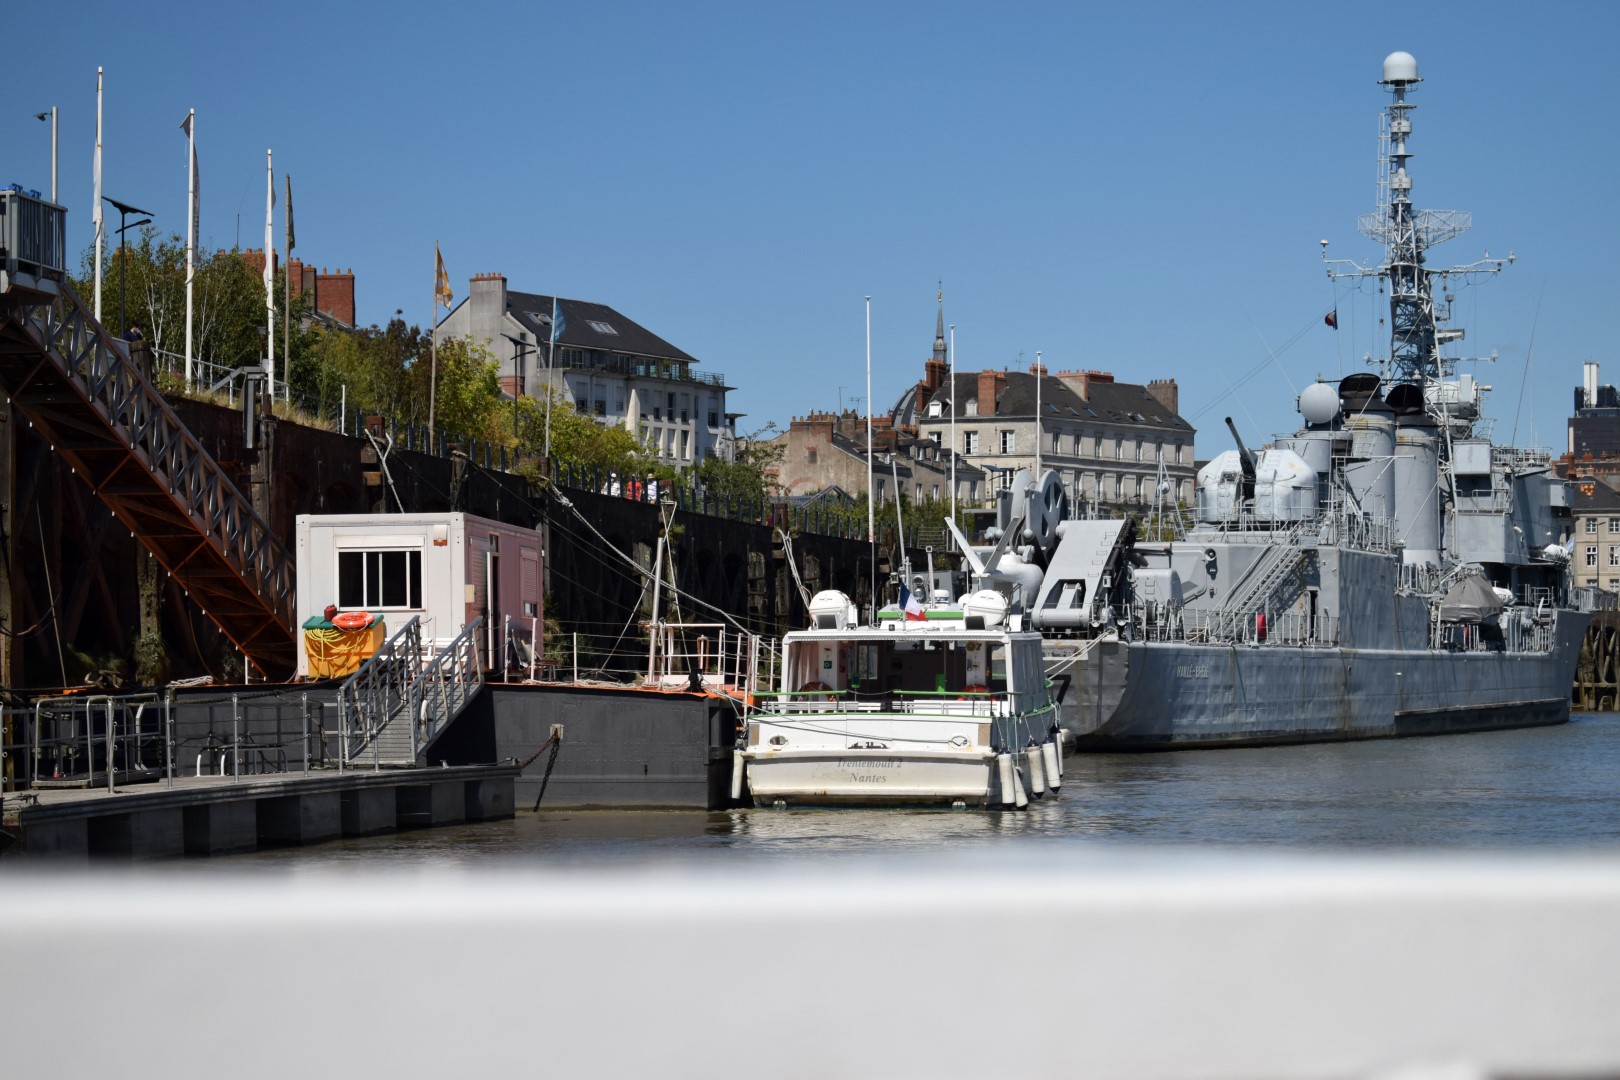 Gare Maritime, the Navibus boat to Trentemoult across the Loire River, Nantes, July 2020